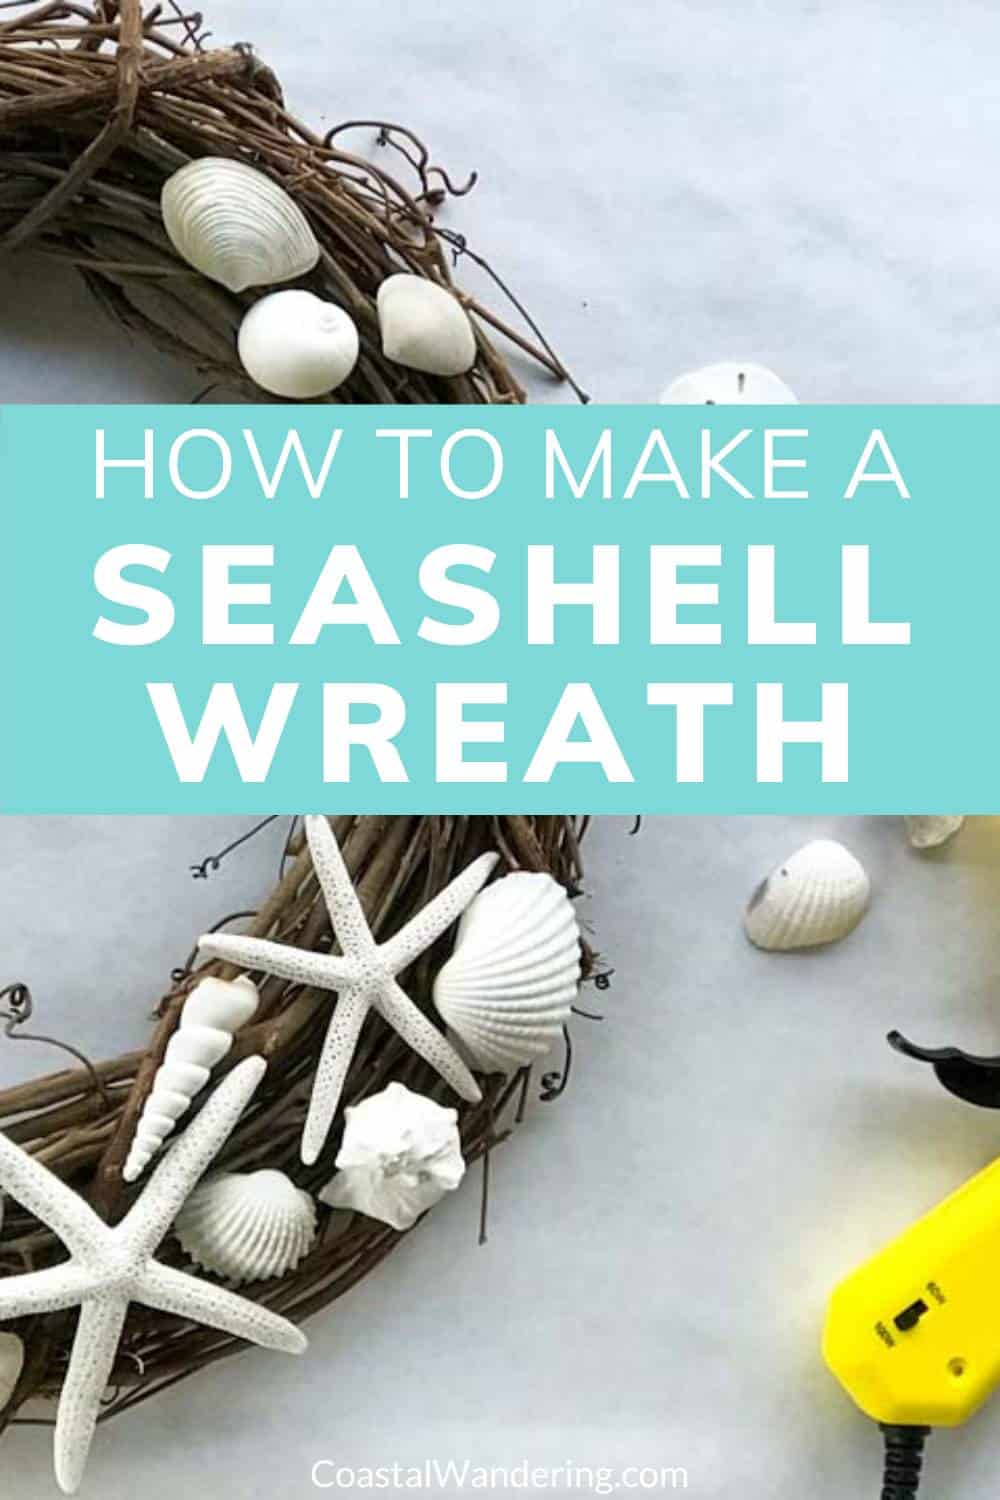 How to make a seashell wreath